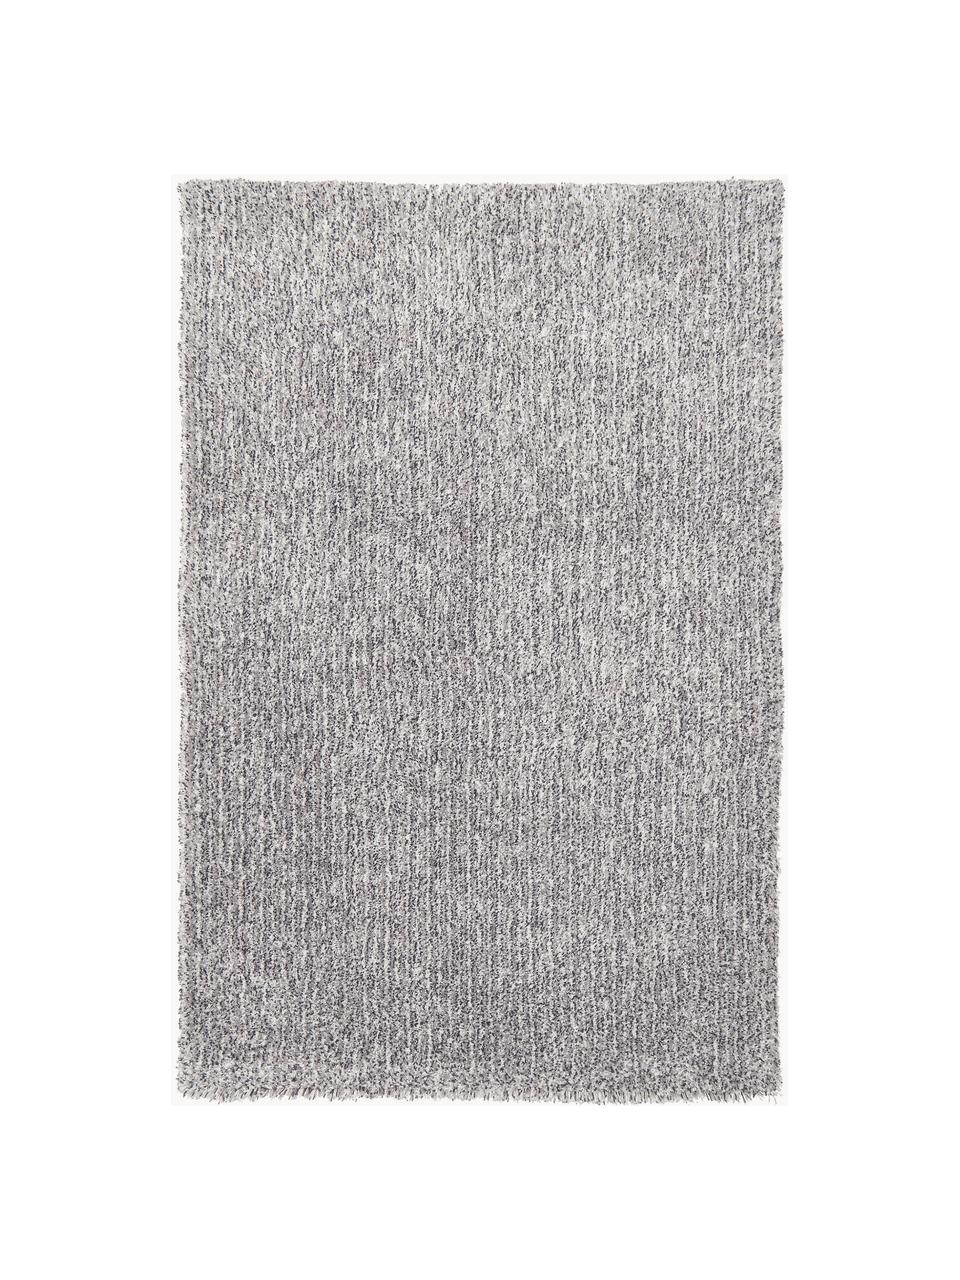 Flauschiger Melange Hochflor-Teppich Marsha, Flor: 100 % Polyester, Grau, B 80 x L 150 cm (Größe XS)